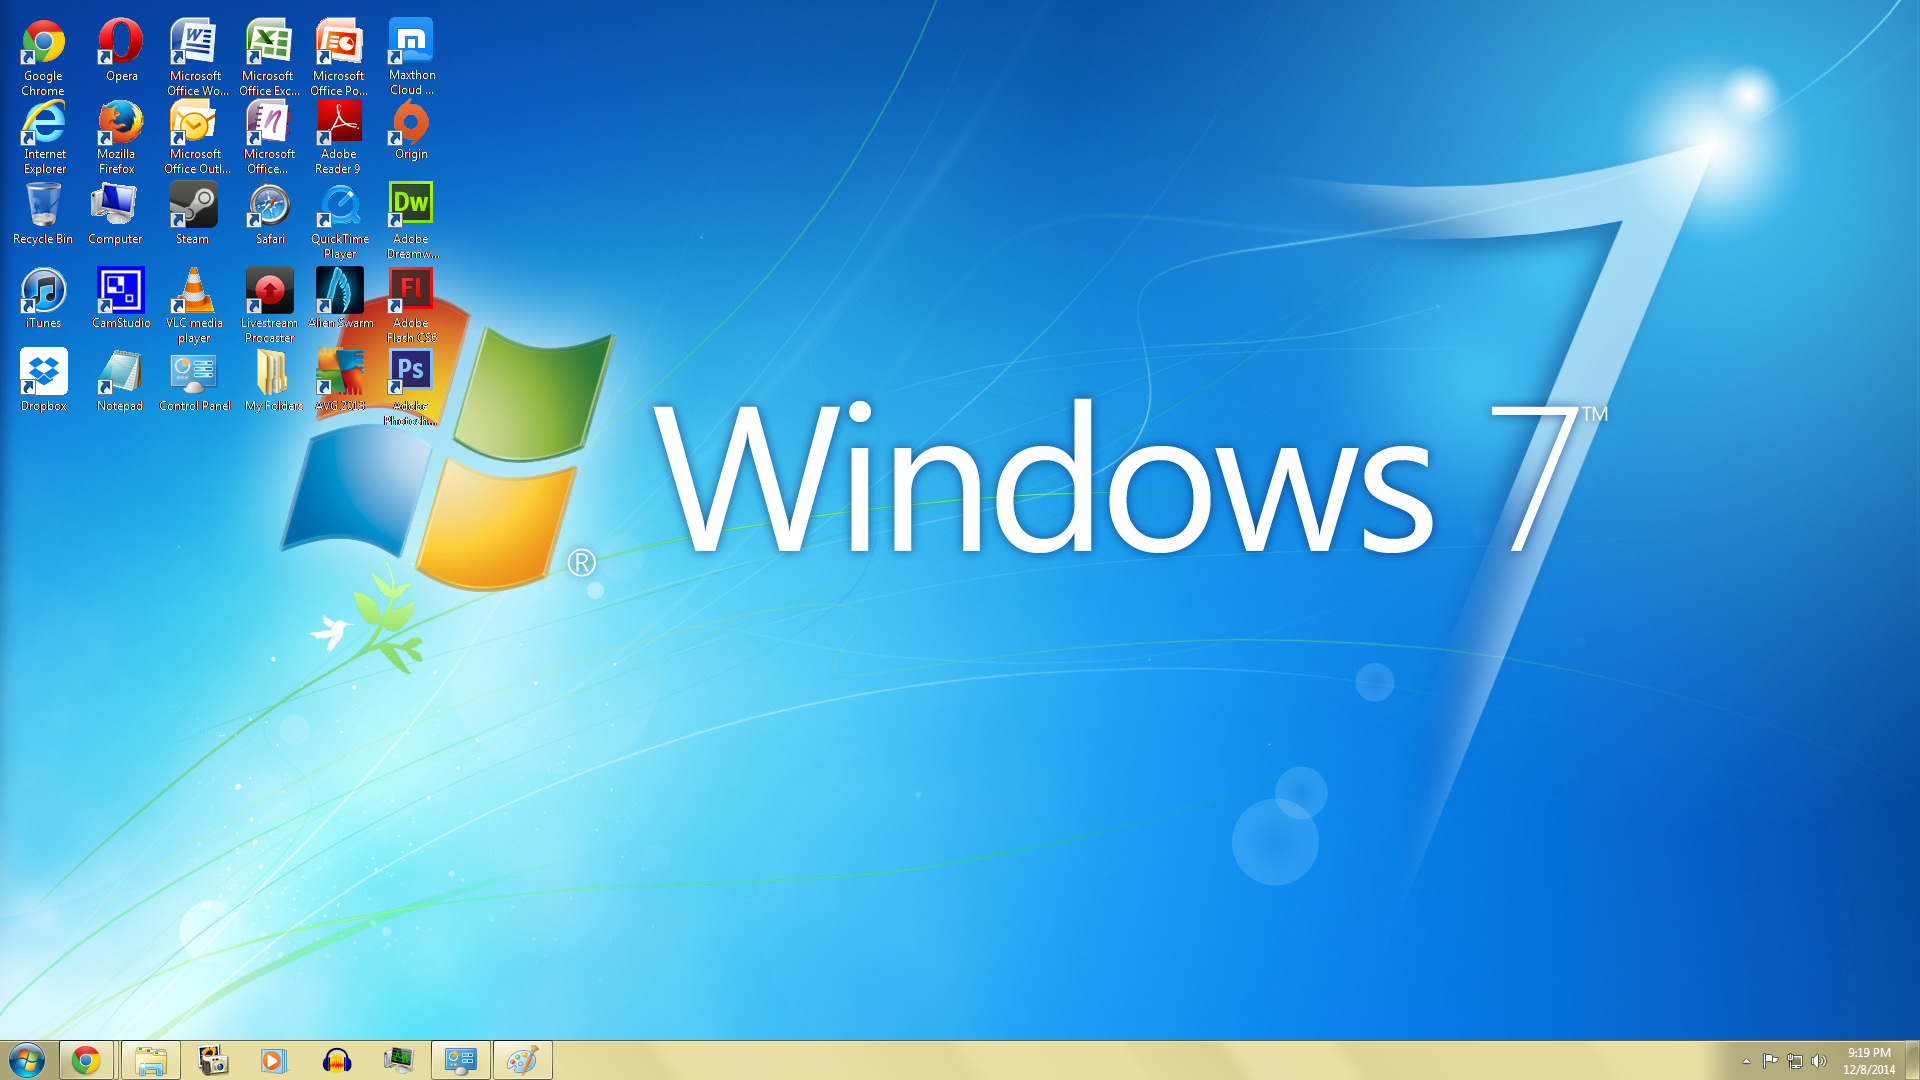 Виндовс 7. Windows 7 рабочий стол. Windows 7 Скриншоты. Windows 7 Интерфейс. Модель windows 7